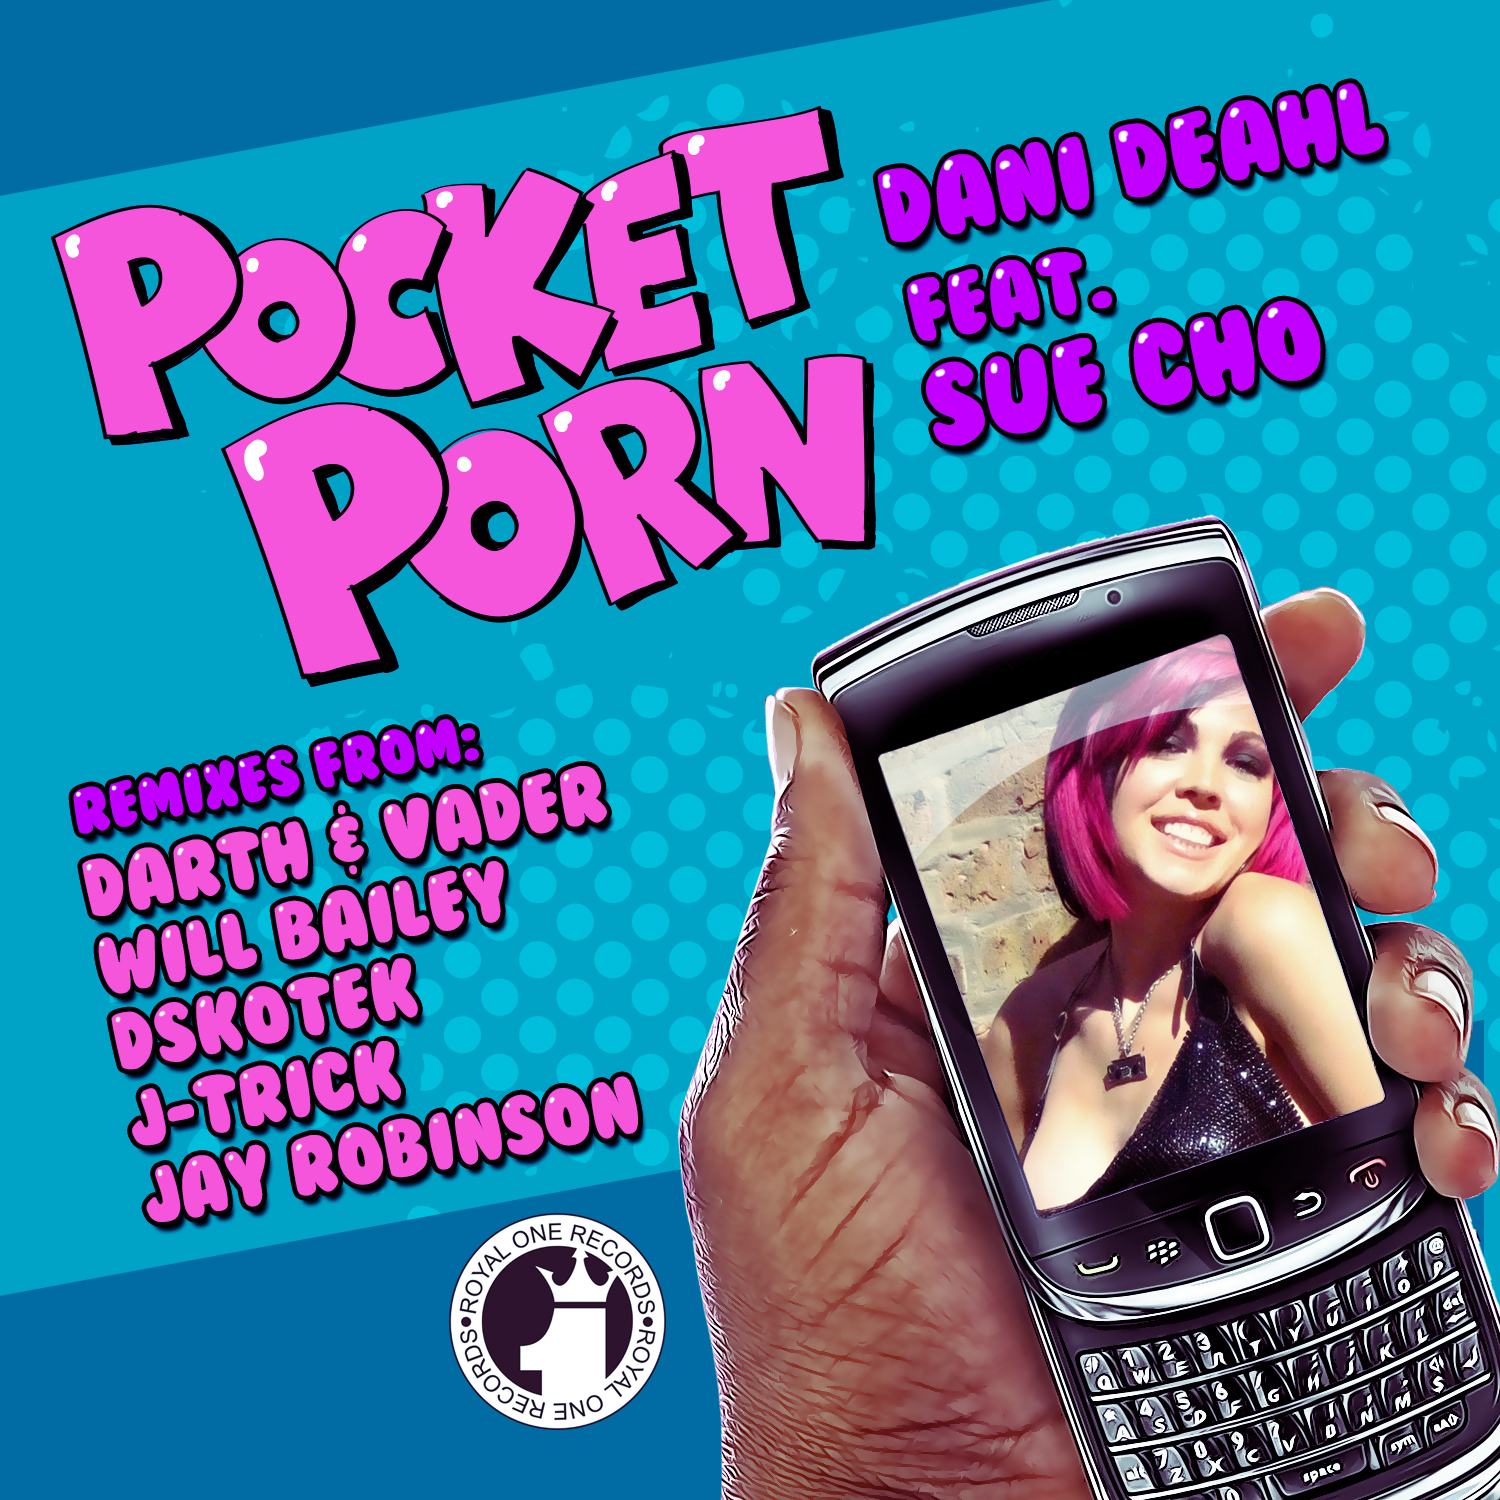 Dani Deahl - Pocket Porn Feat Sue Cho (DSKOTEK Remix)